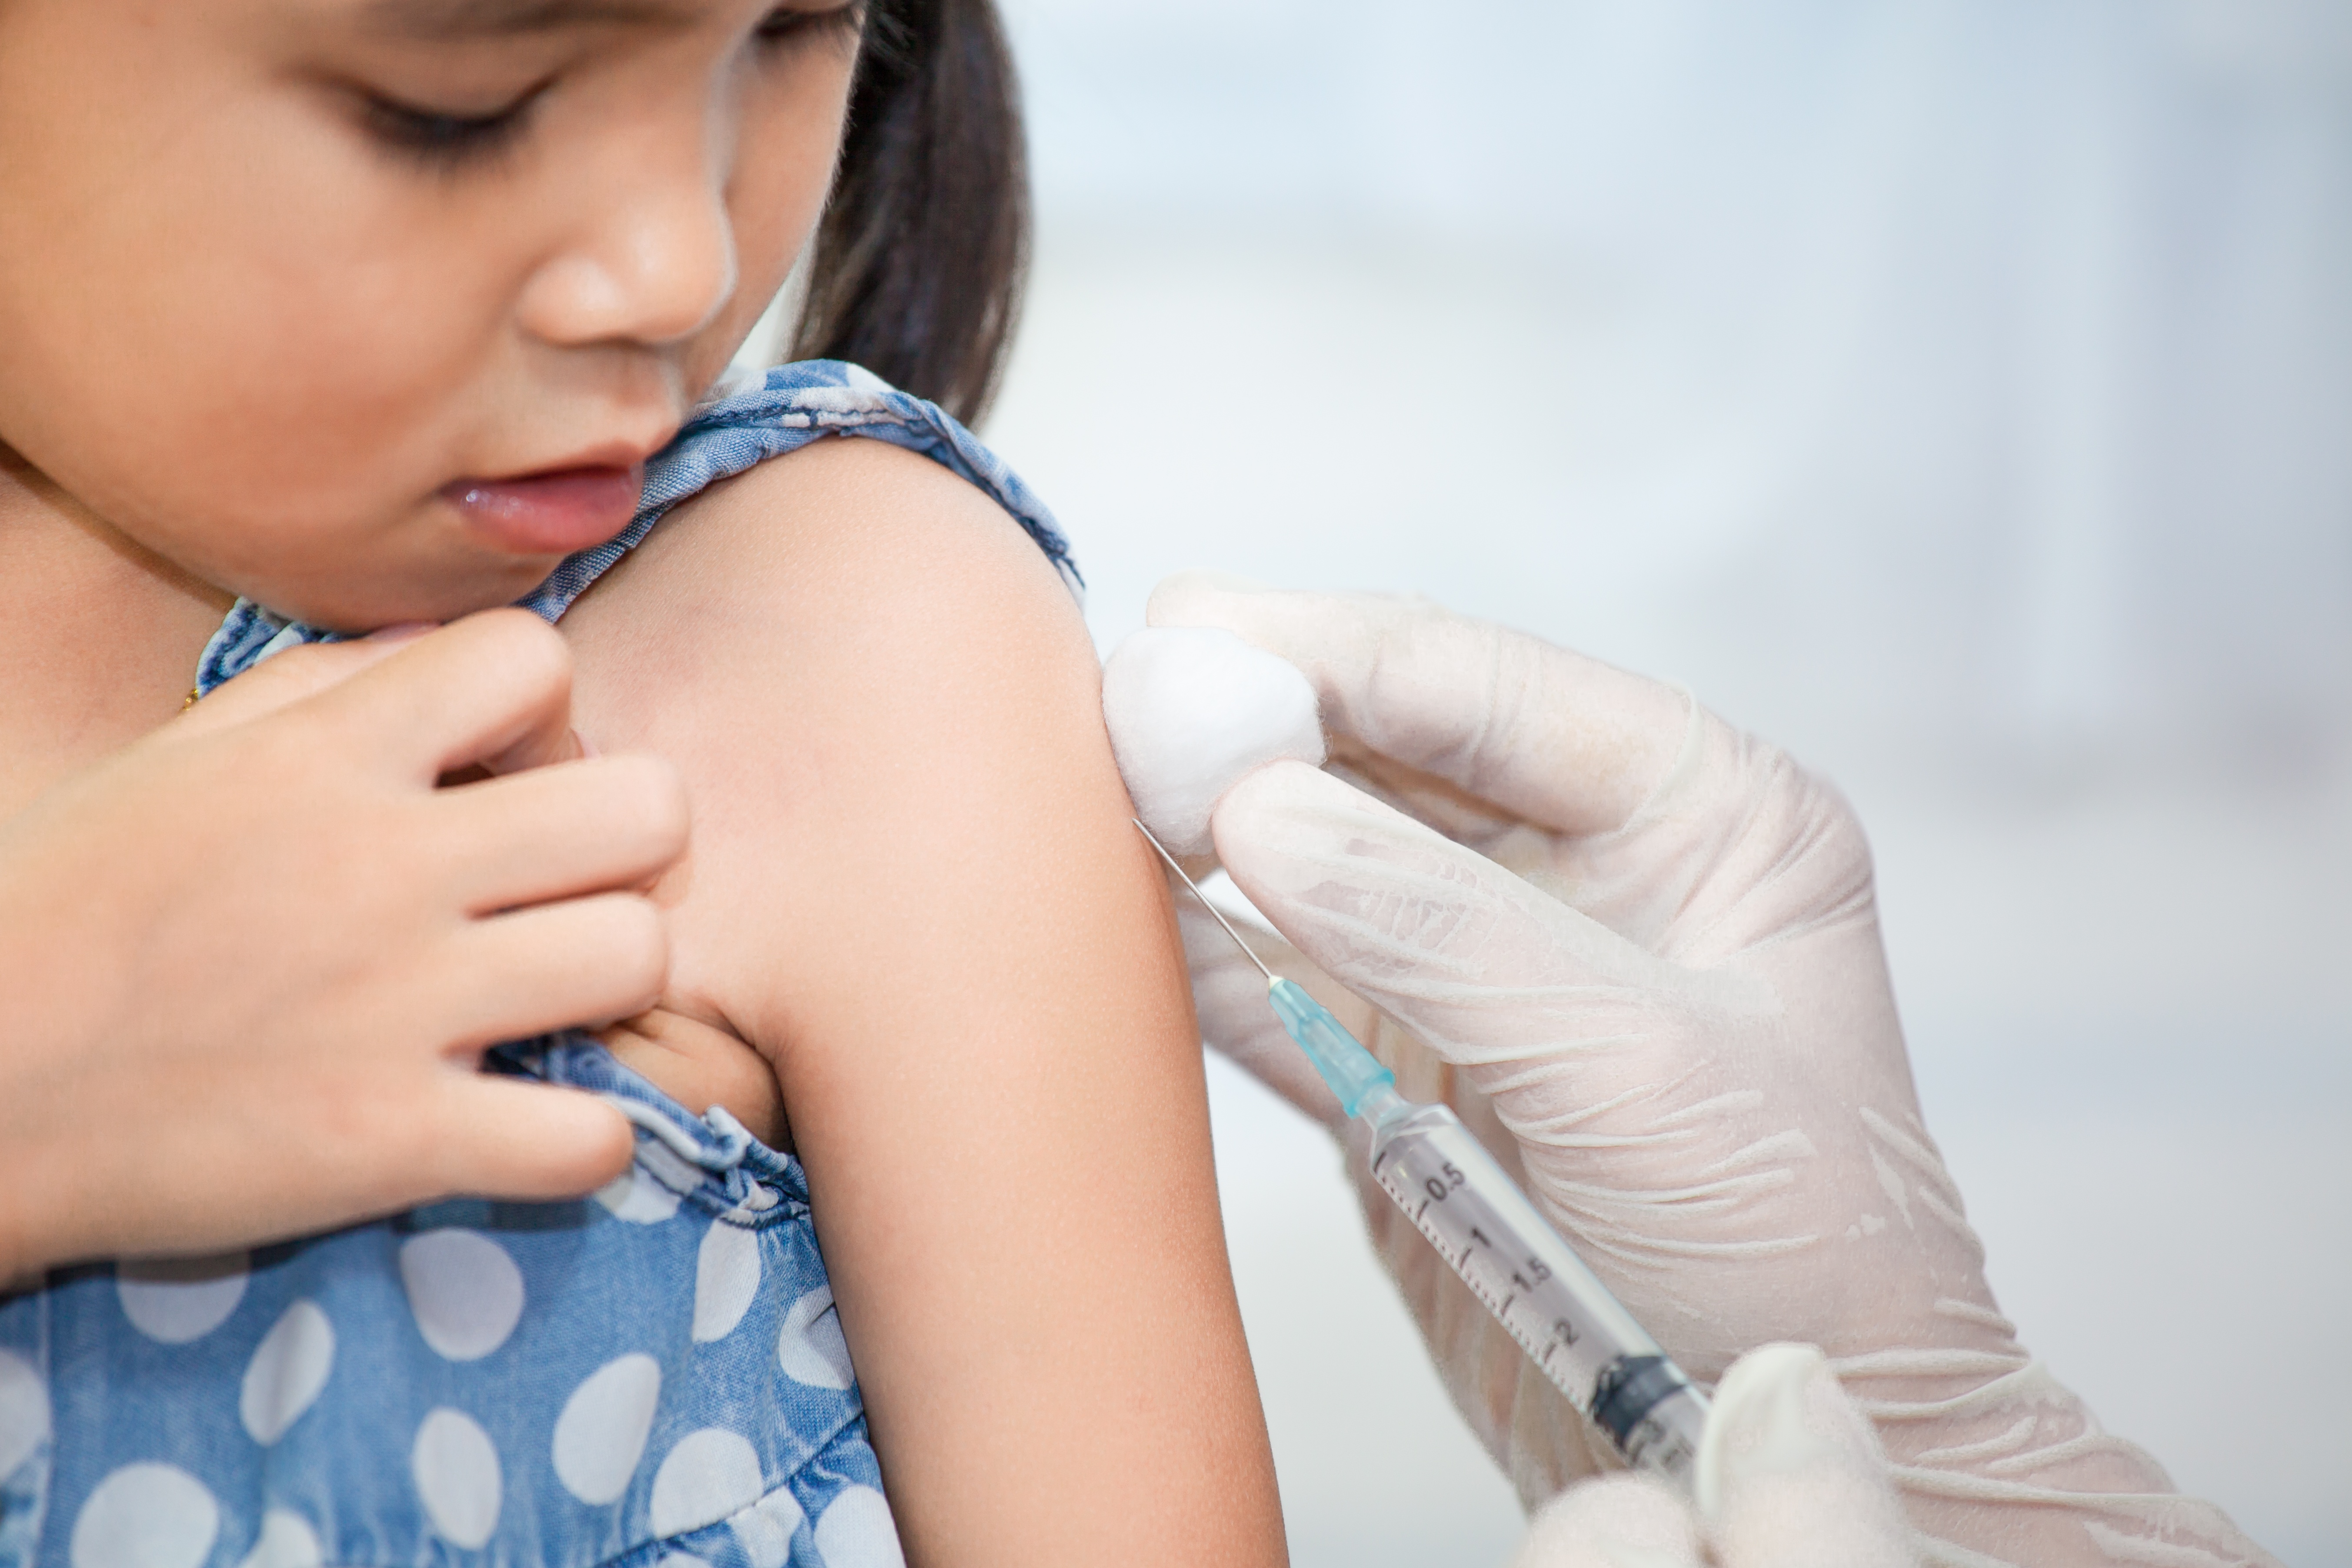 vaccinating child